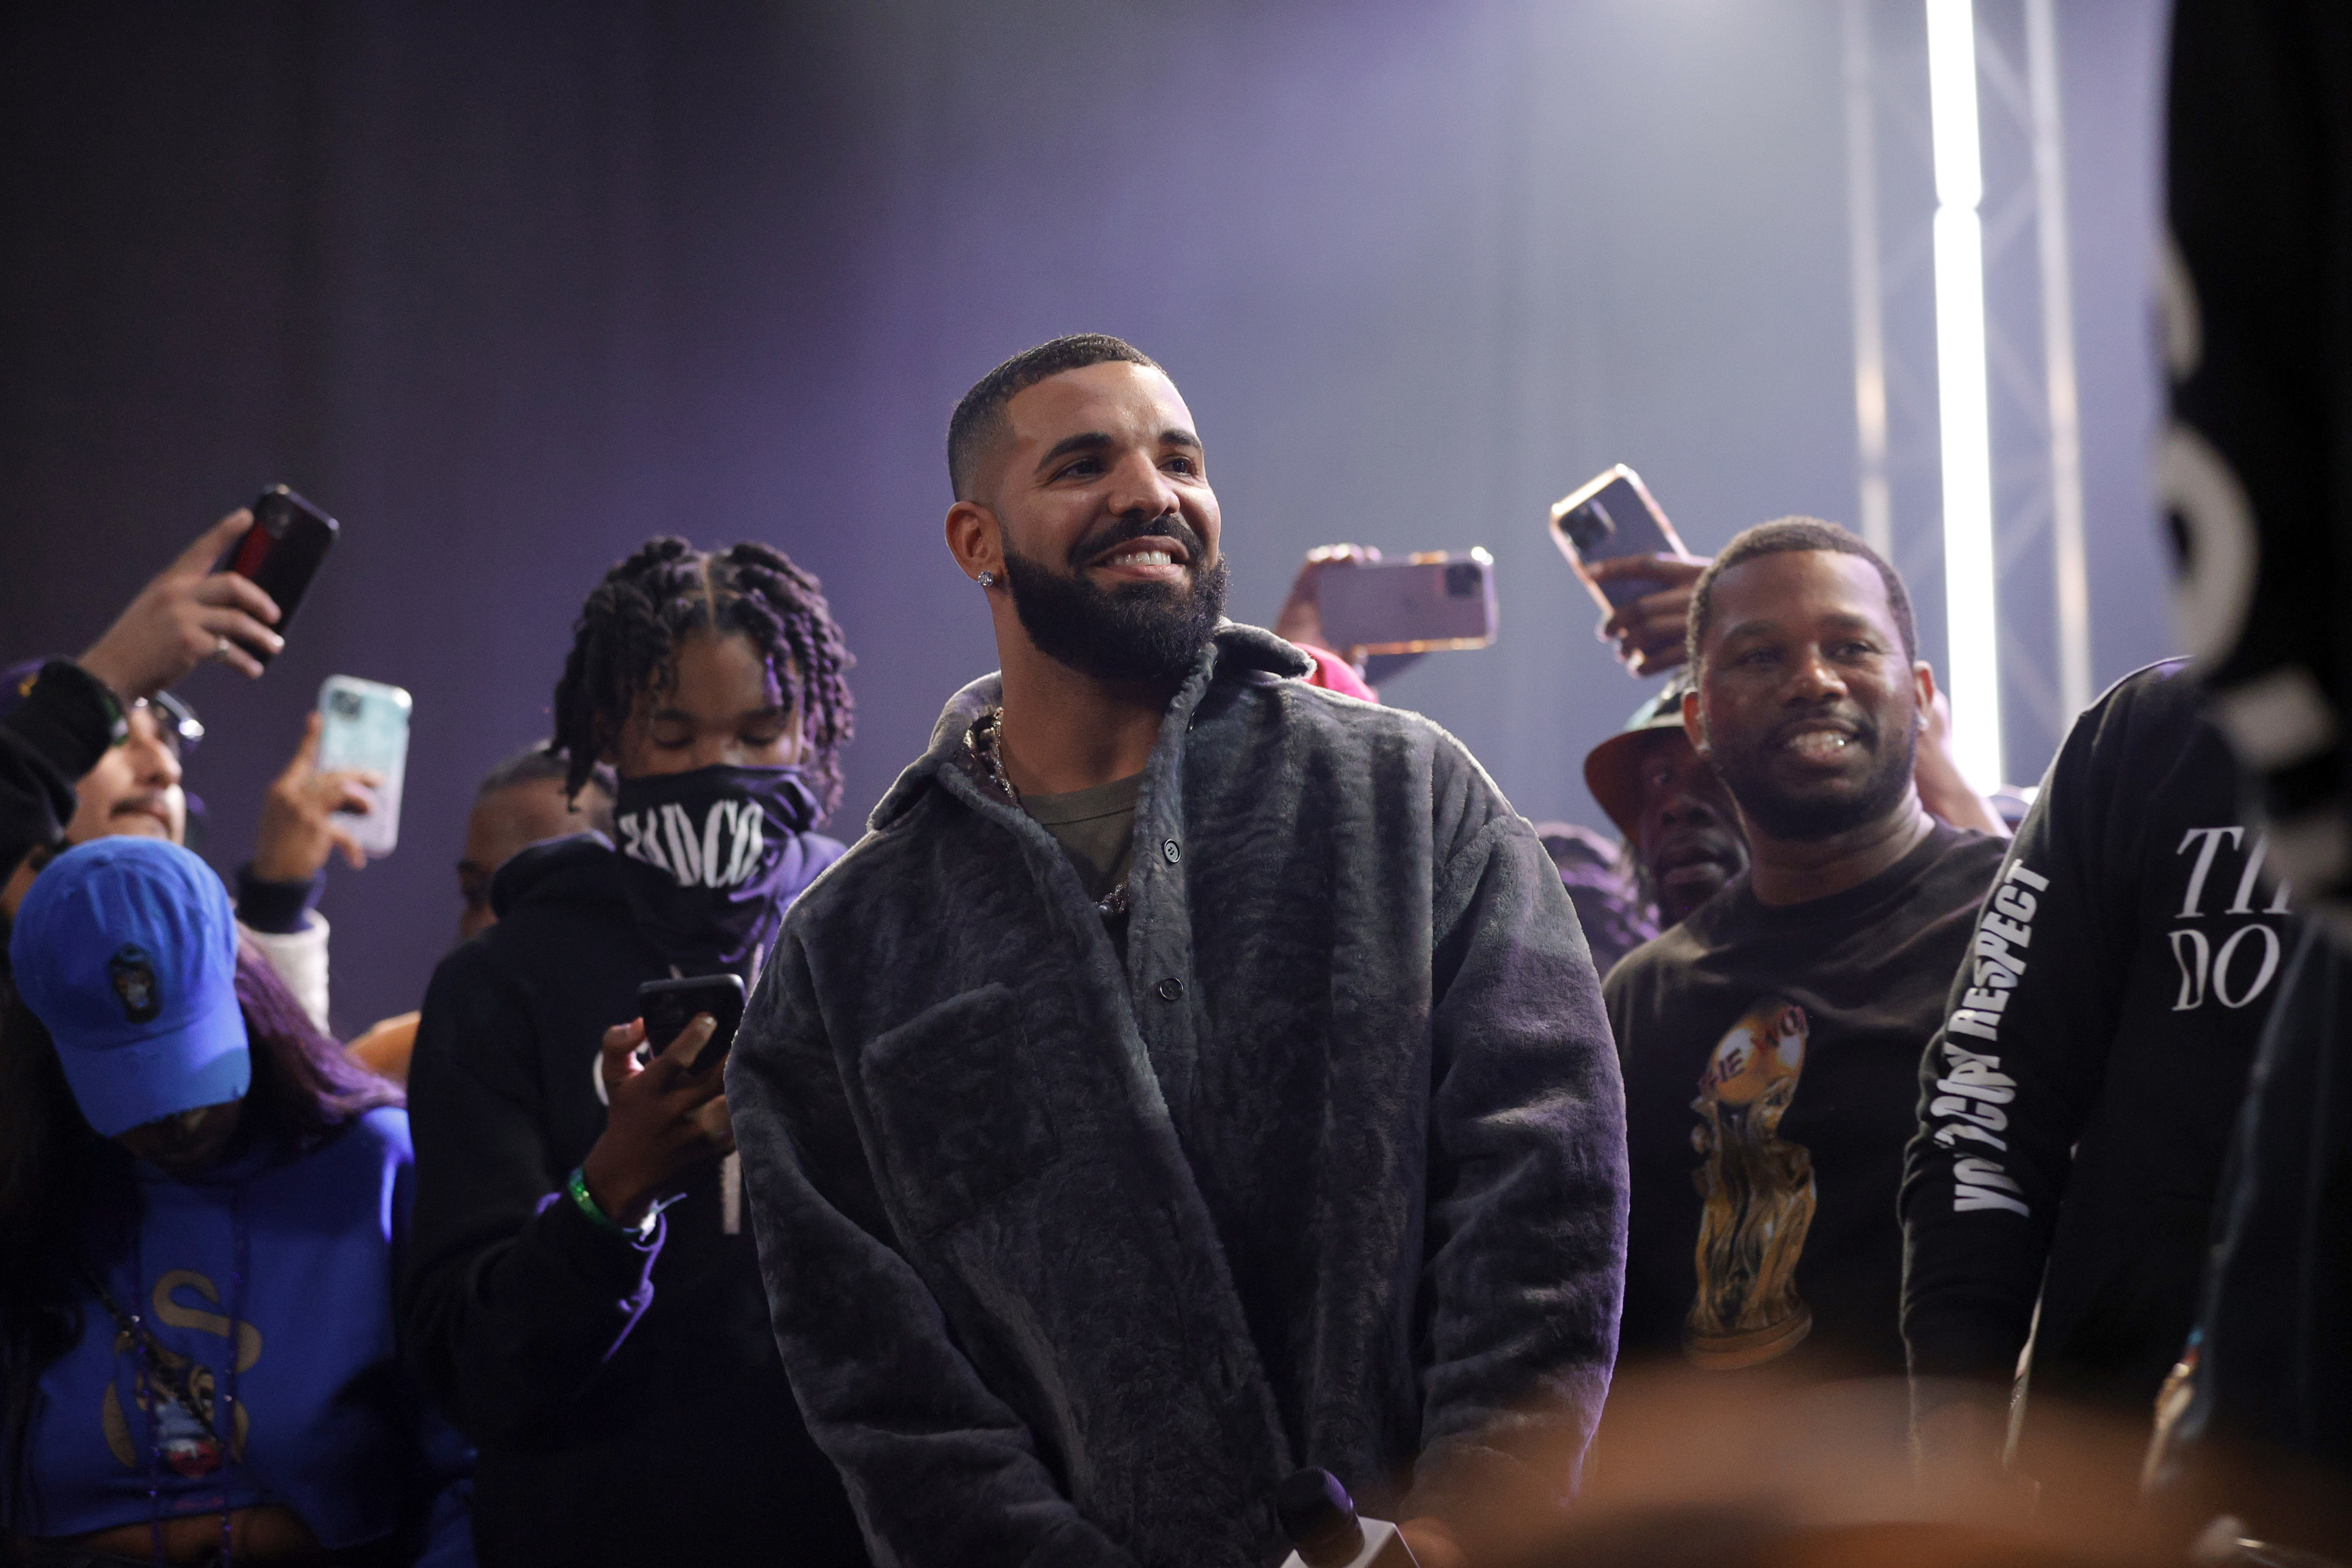 Drake wearing a fur coat smiles among fans holding up phones